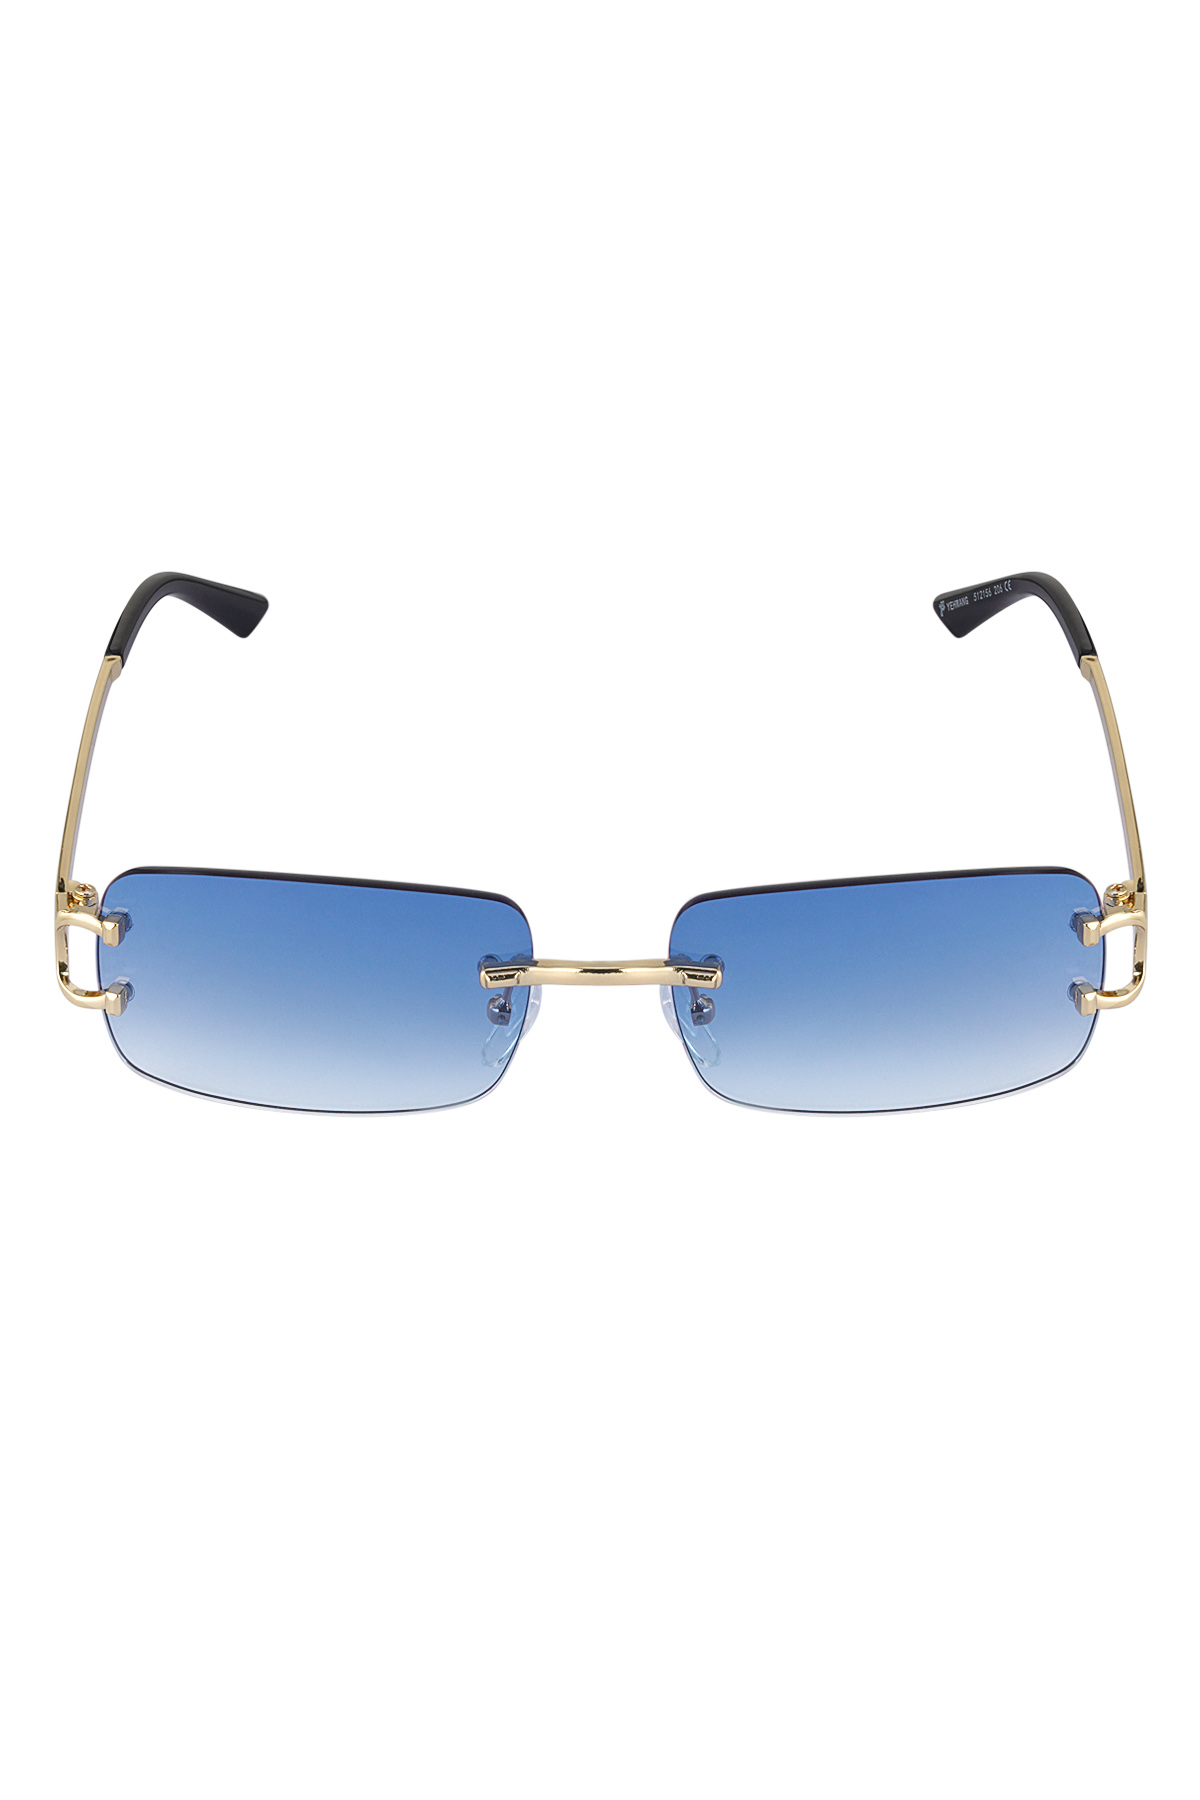 Sunglasses Sunbeam - blue gold Picture4